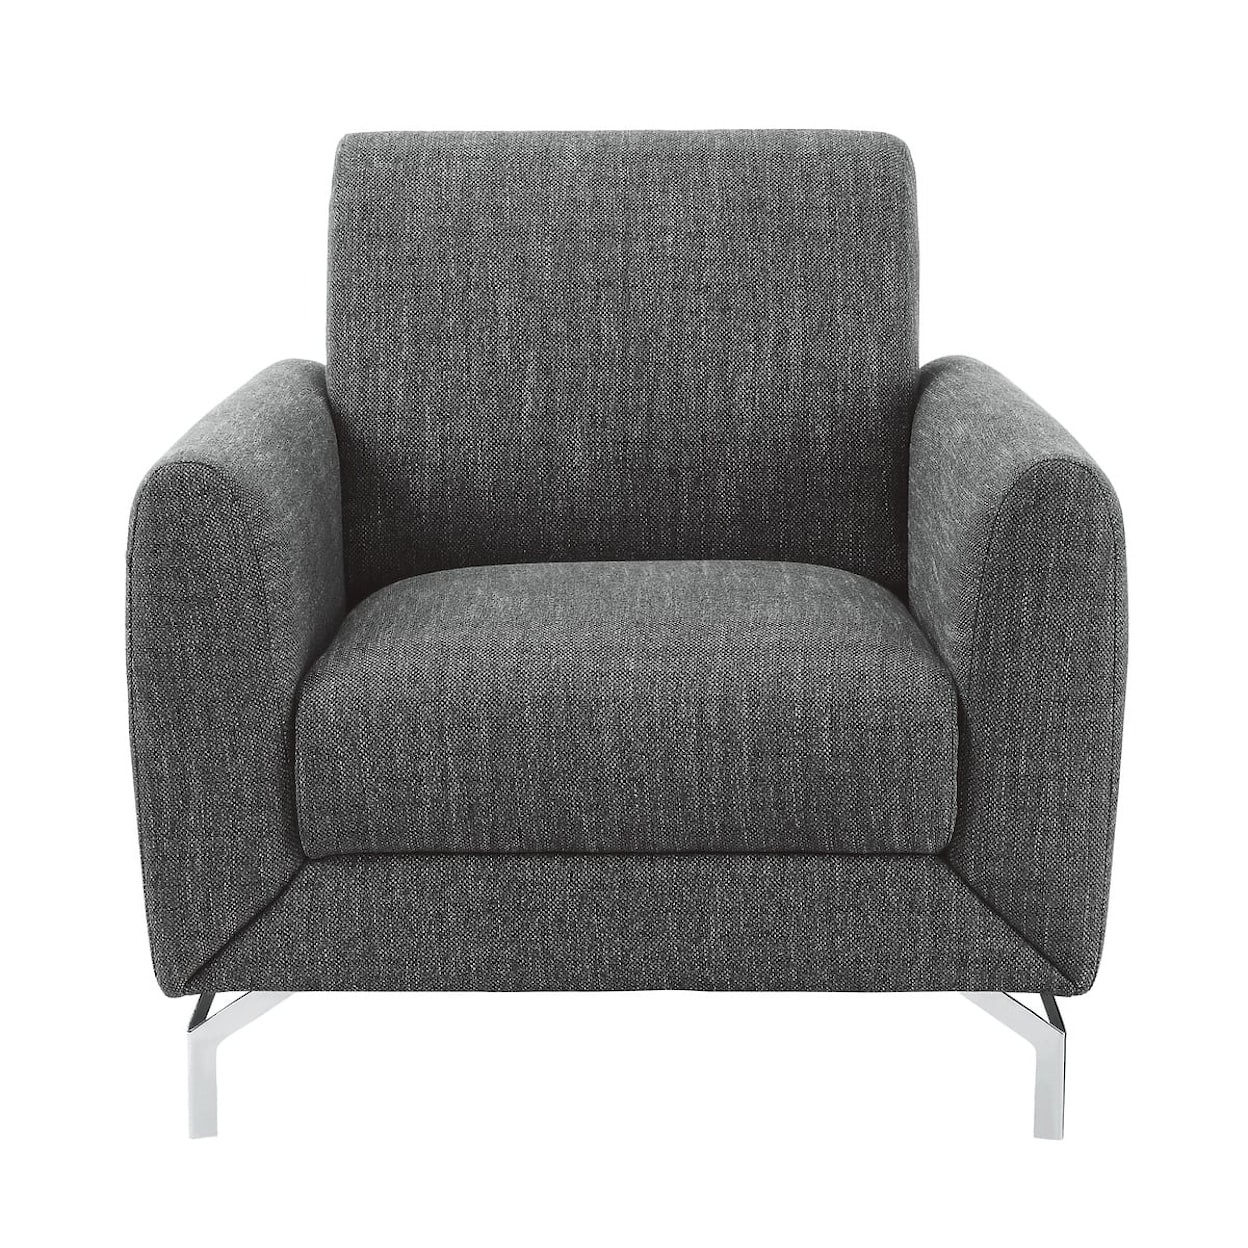 Homelegance Furniture Venture Stationary Chair